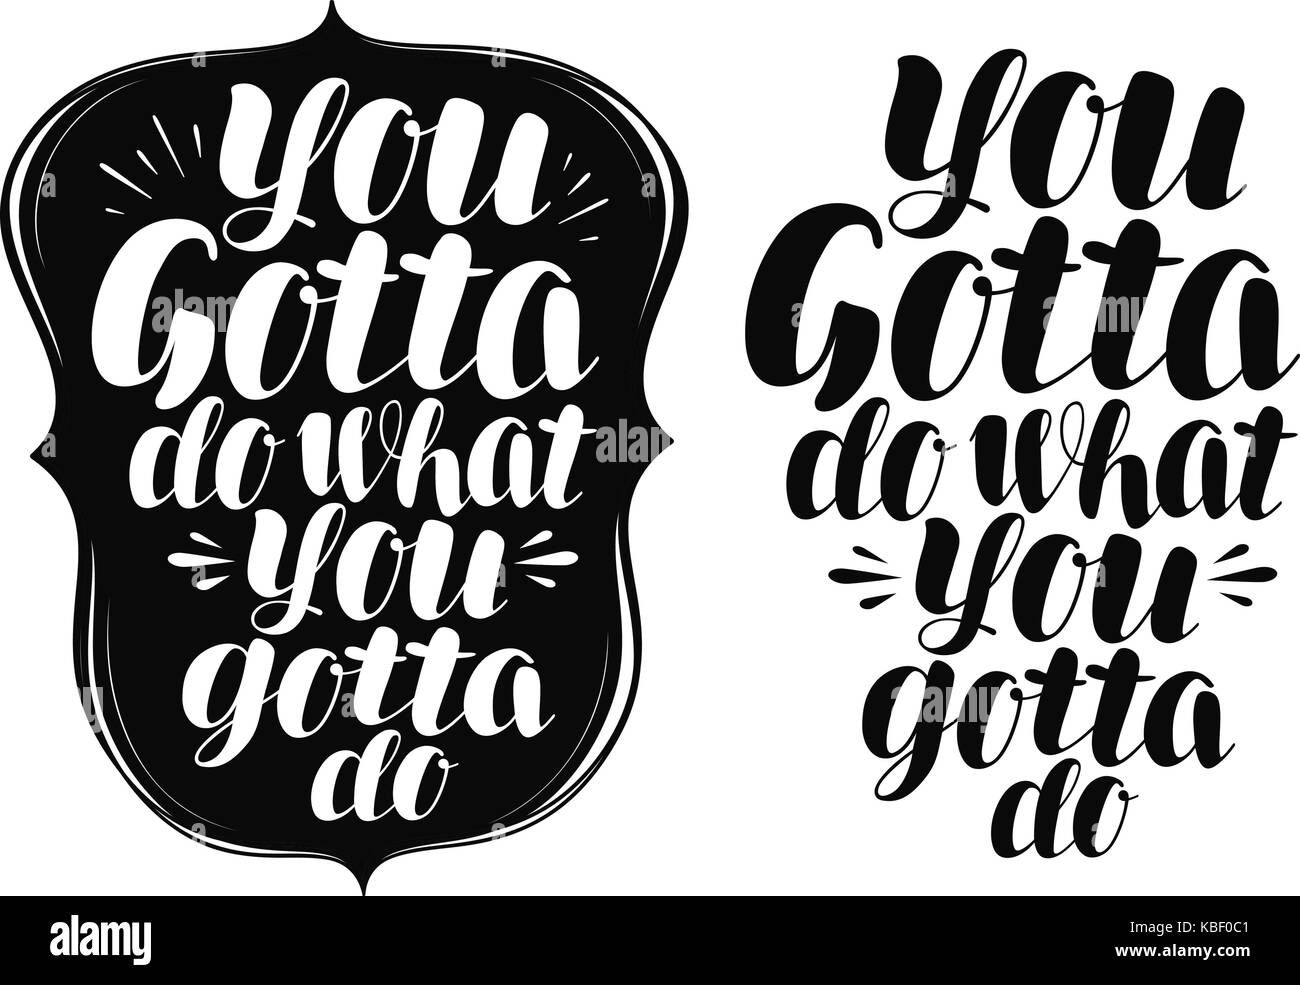 You gotta do what you gotta do, lettering. Handwritten calligraphy vector illustration Stock Vector